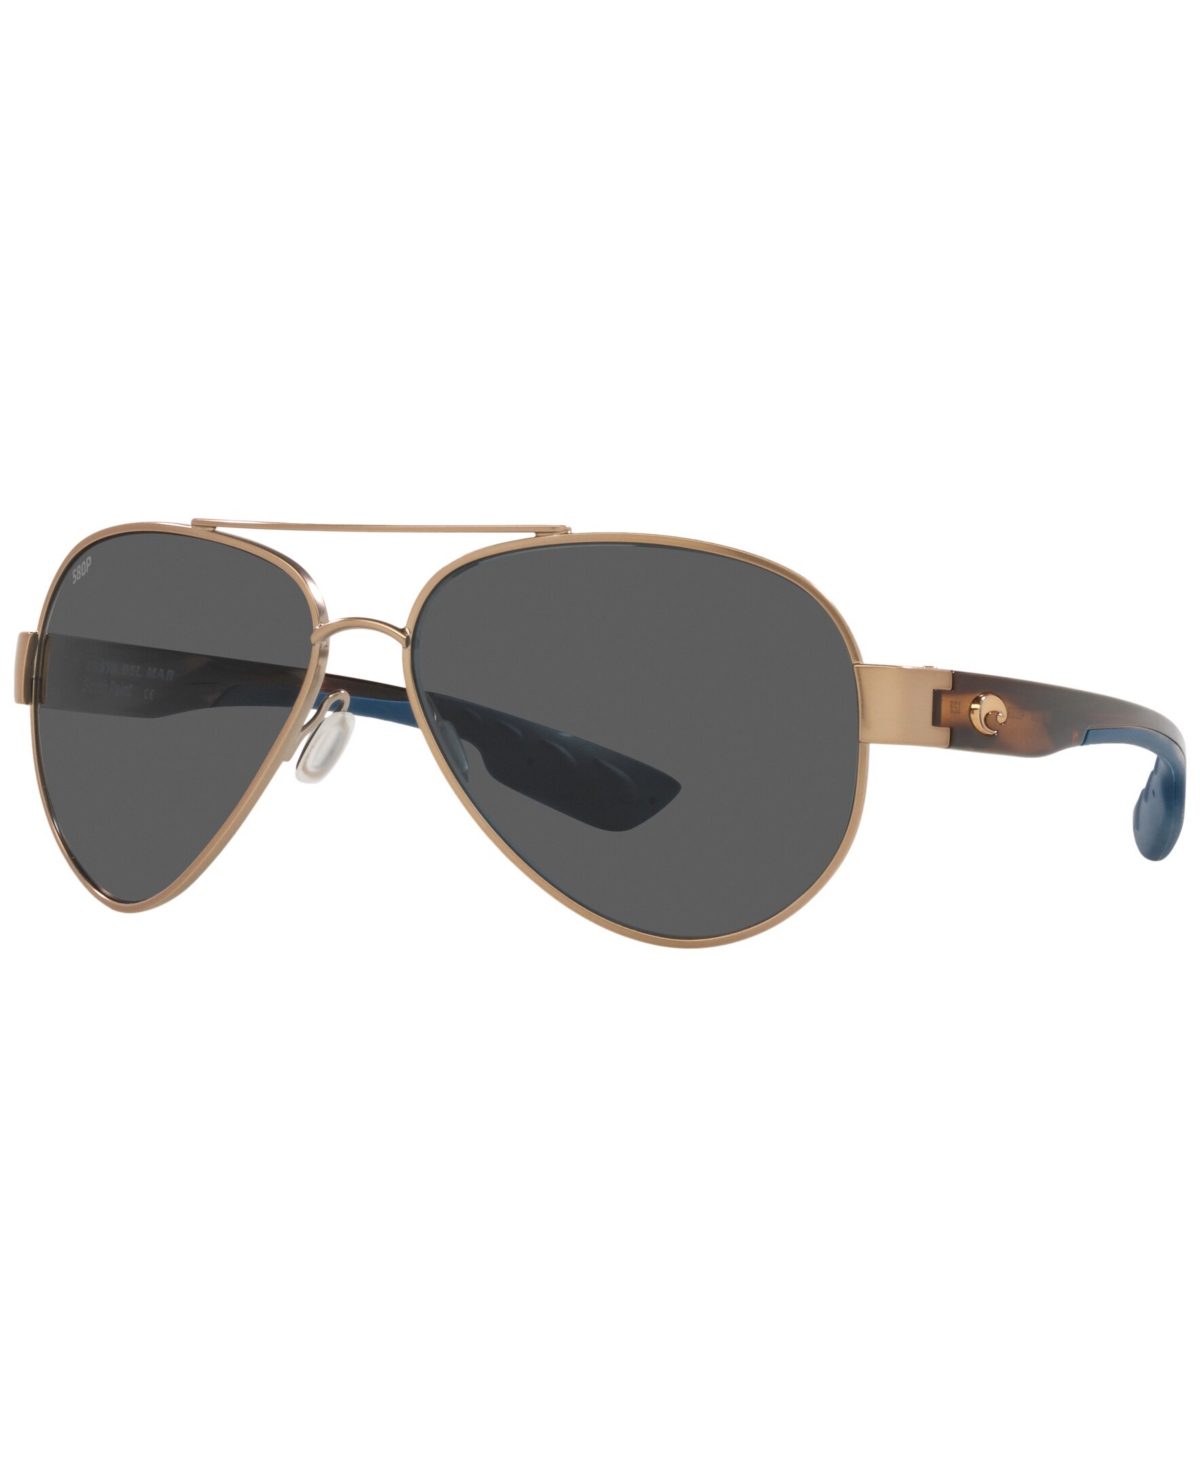 Men's Polarized Sunglasses, 6S4010 59 - Golden Pearl